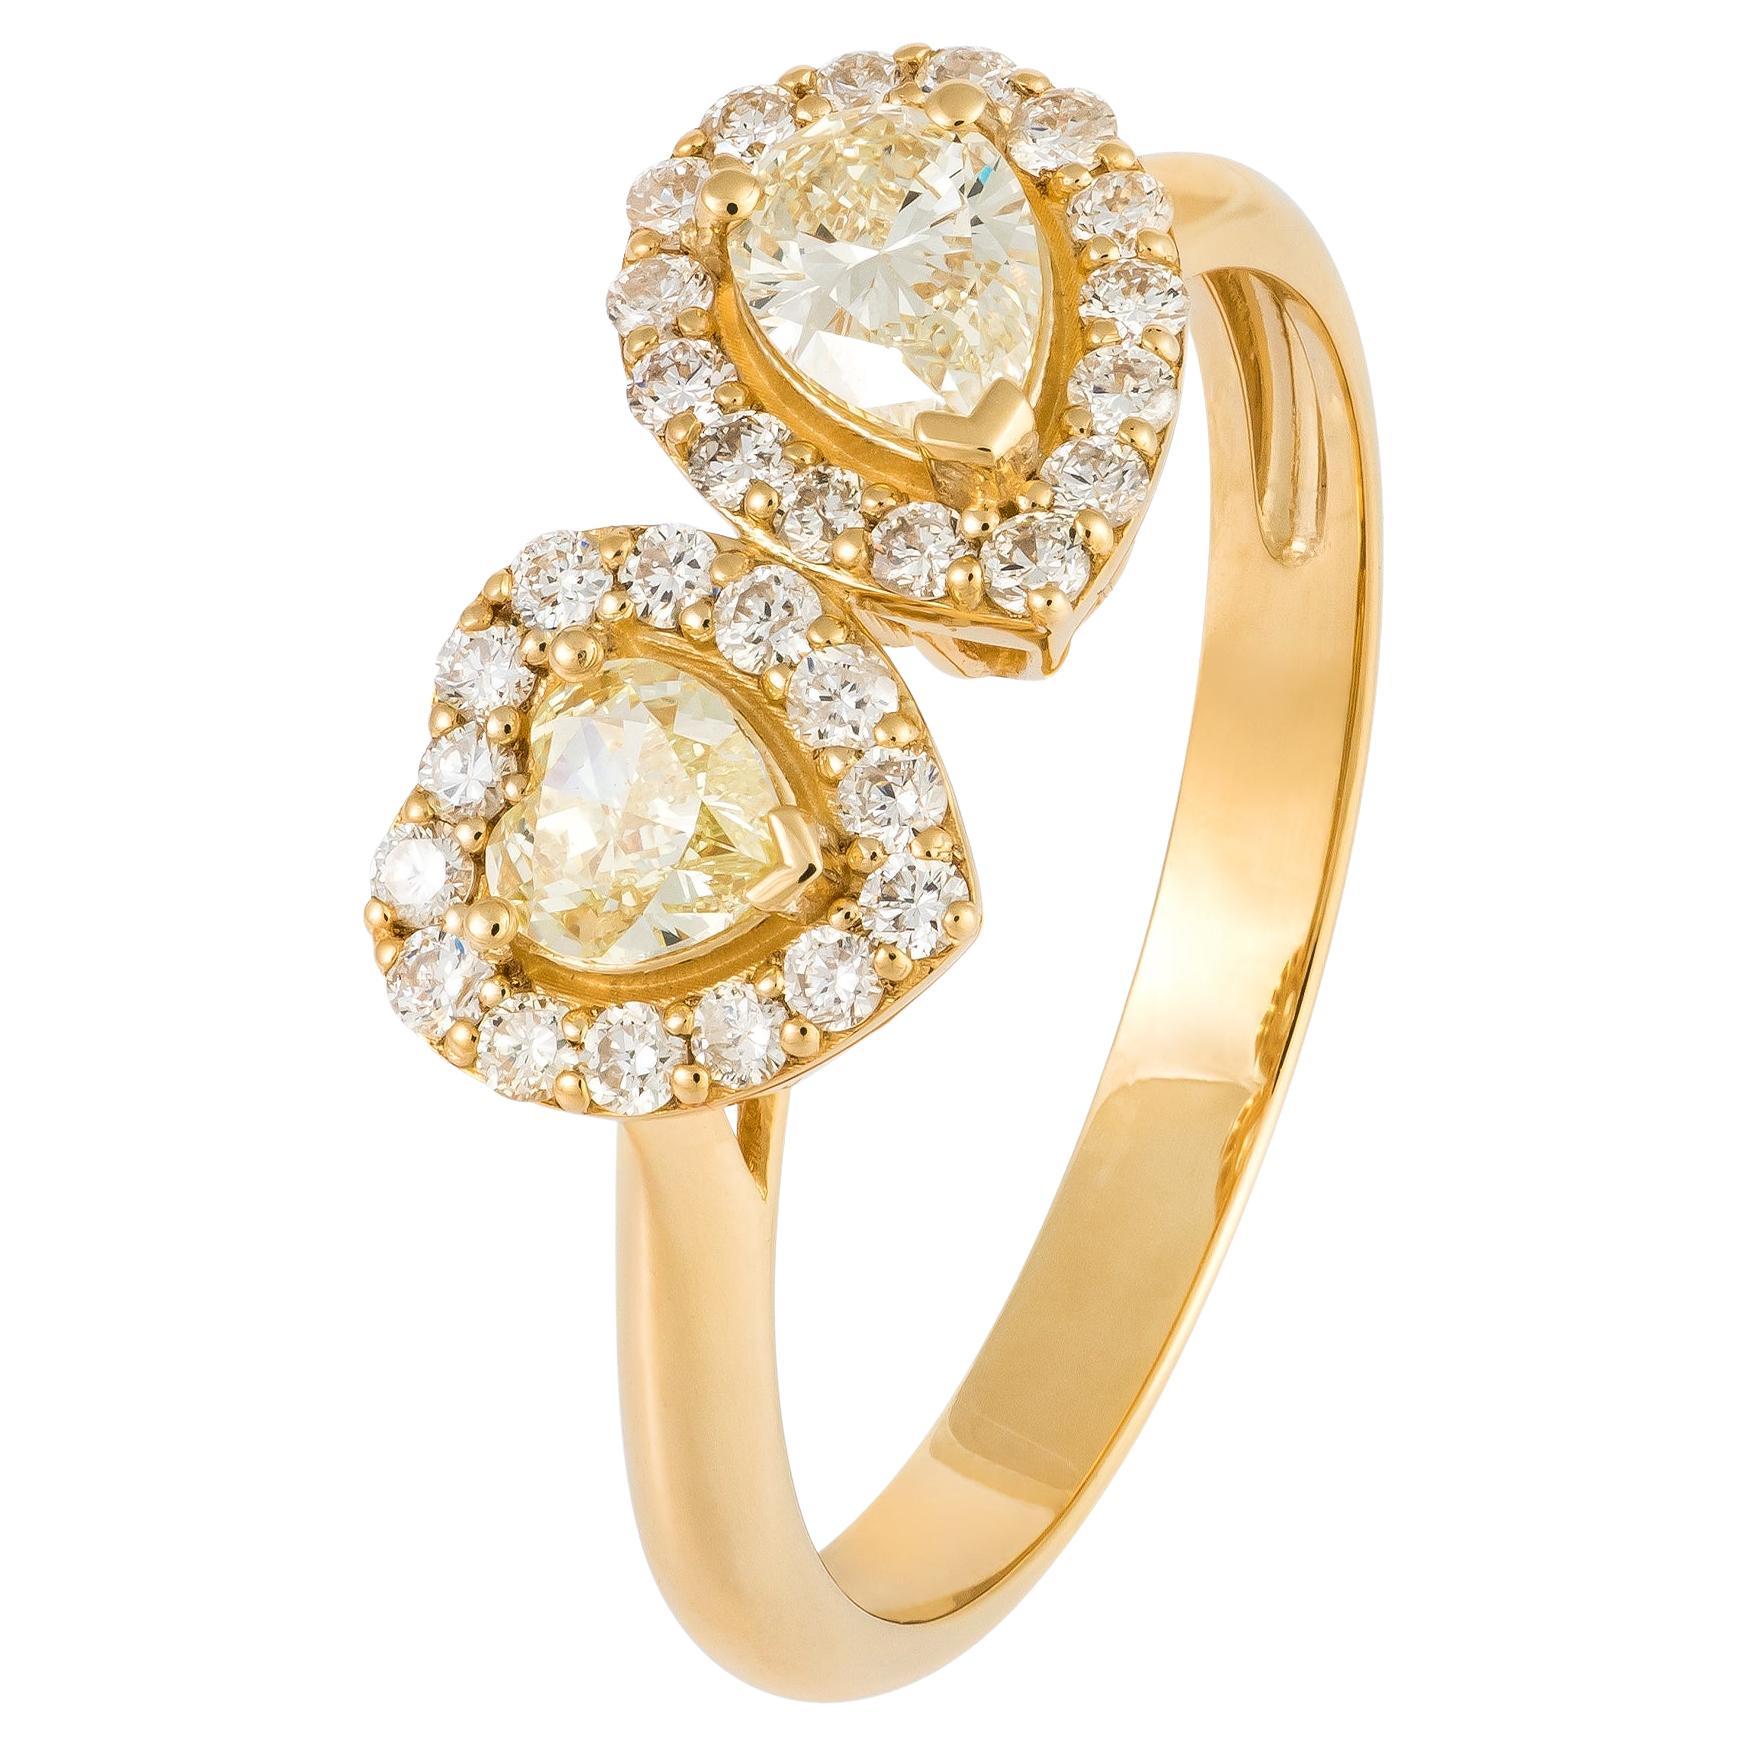 Fancy Yellow 18K Gold White Diamond Ring For Her